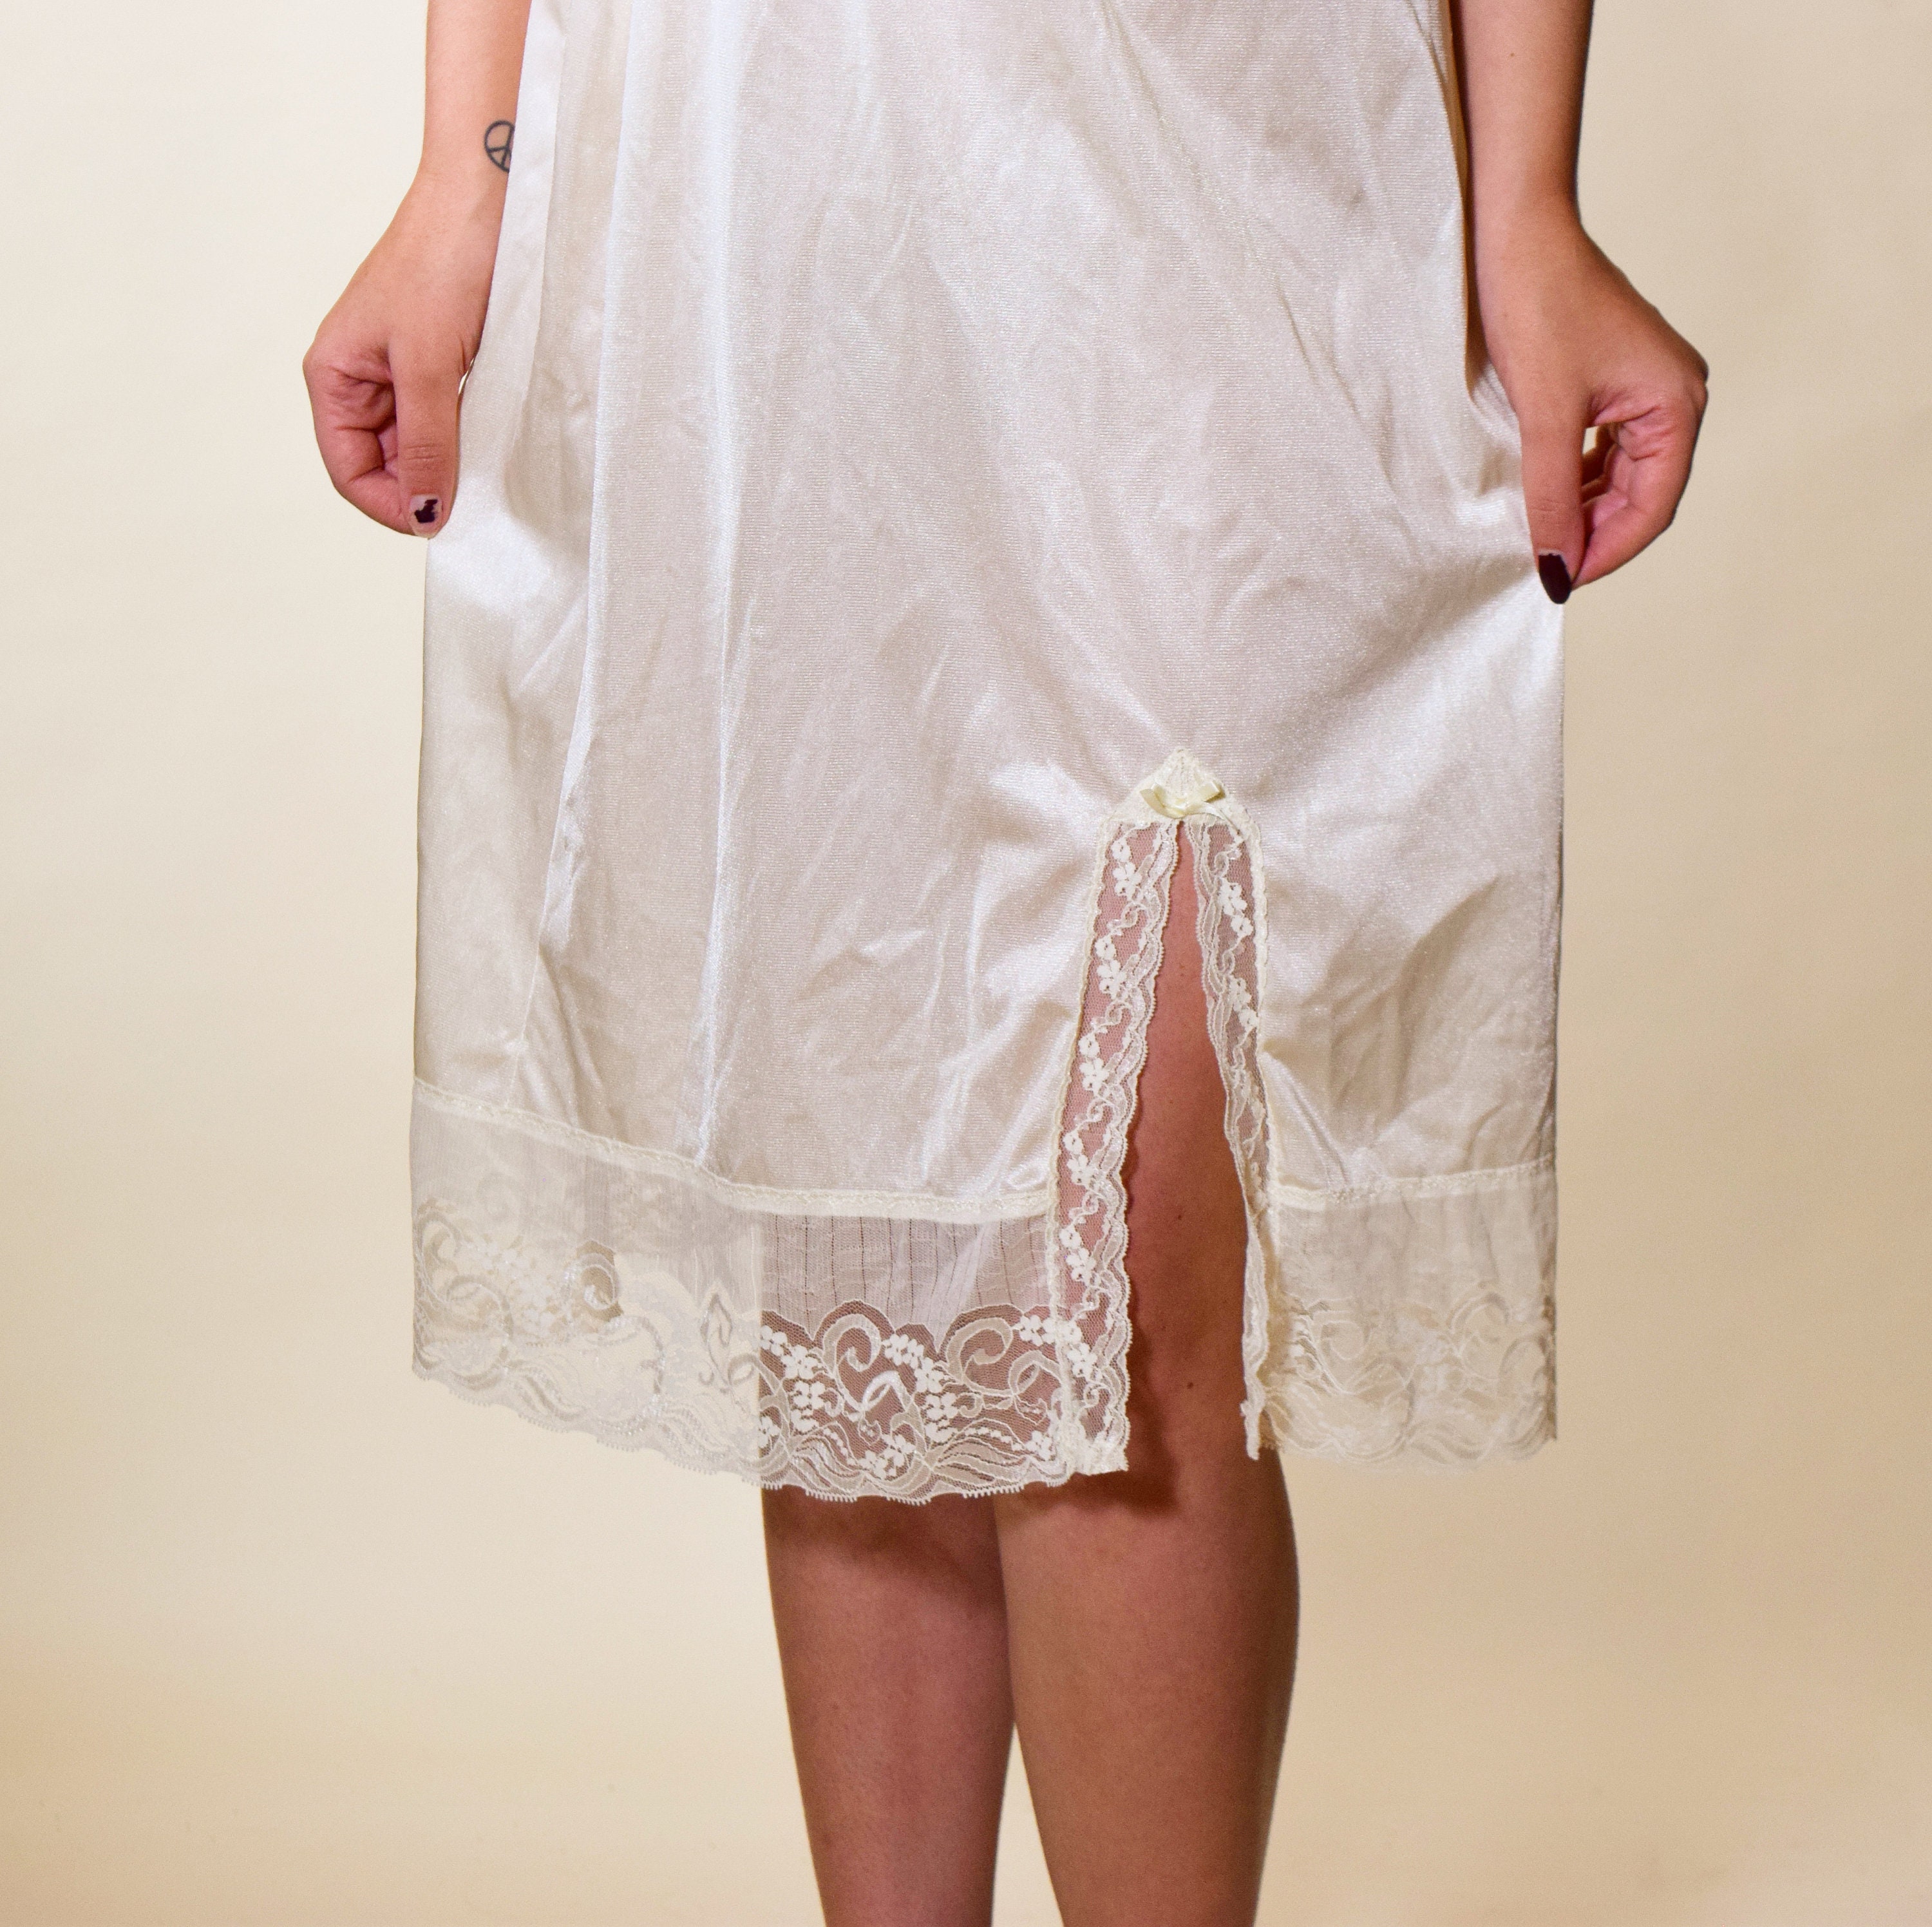 Authentic Vintage 1950s Half Slip Off White Nylon Lace Slip Skirt Women